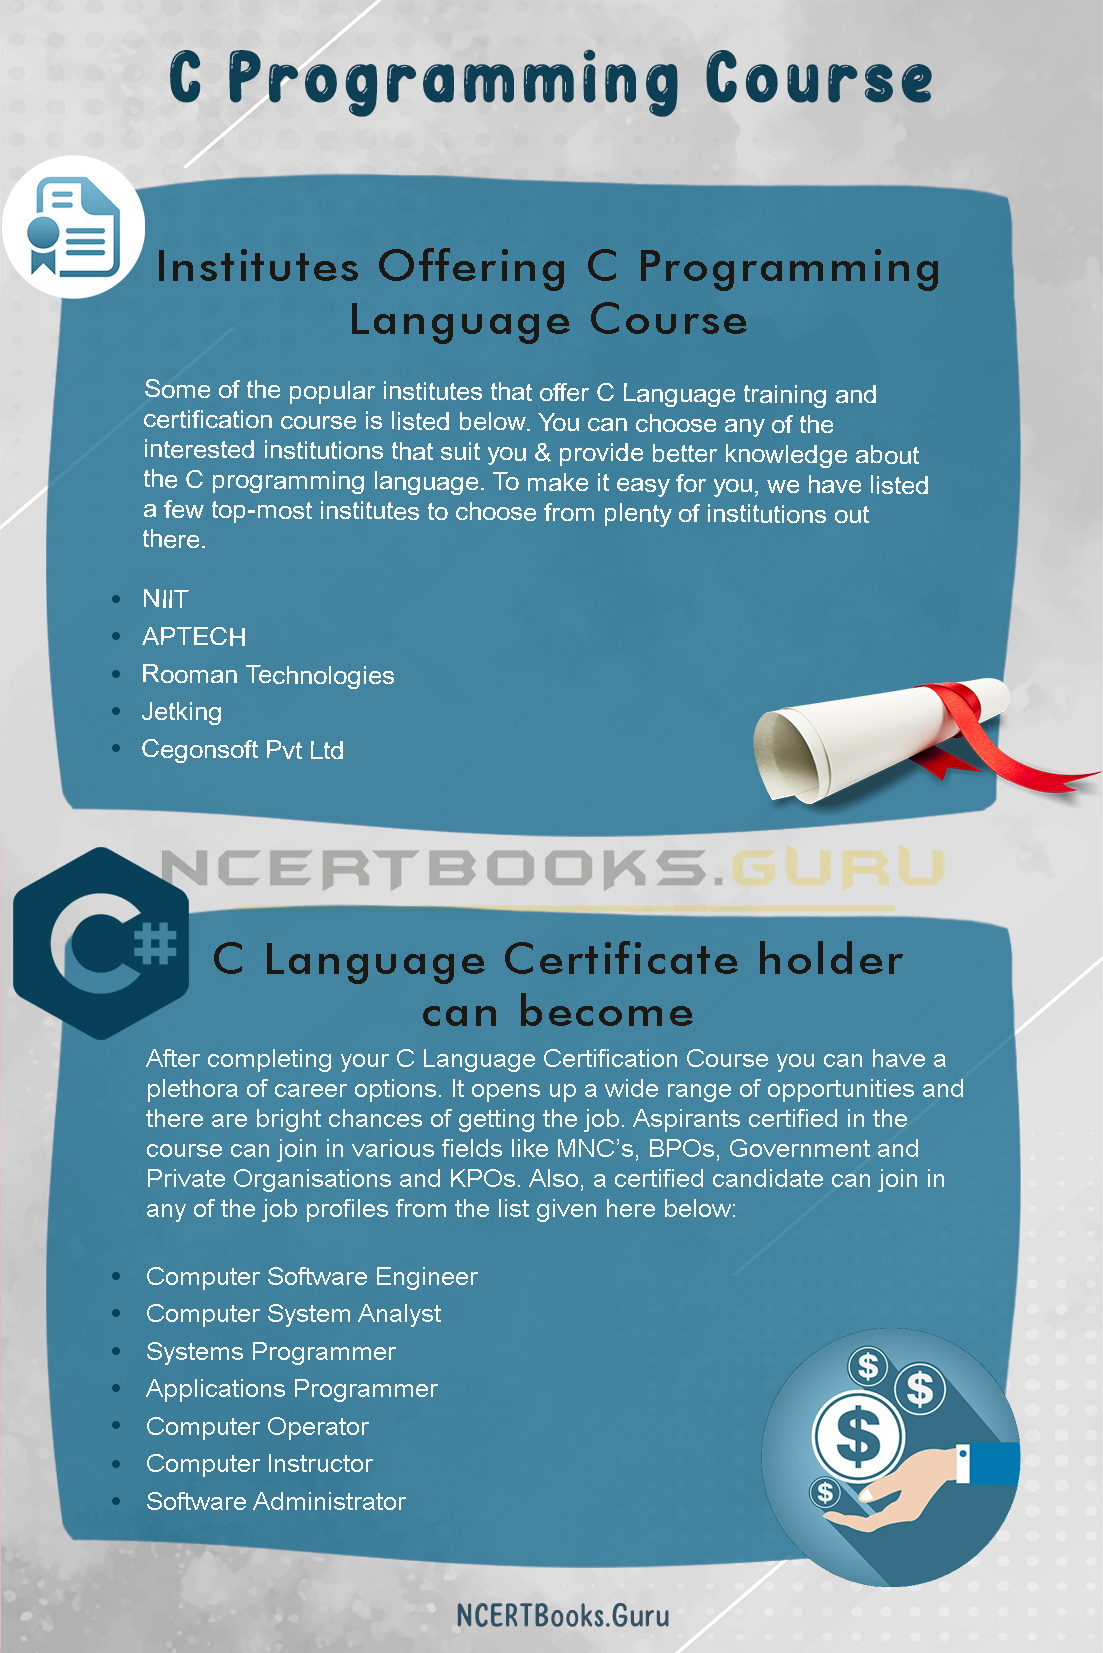 C Programming Course Details 2